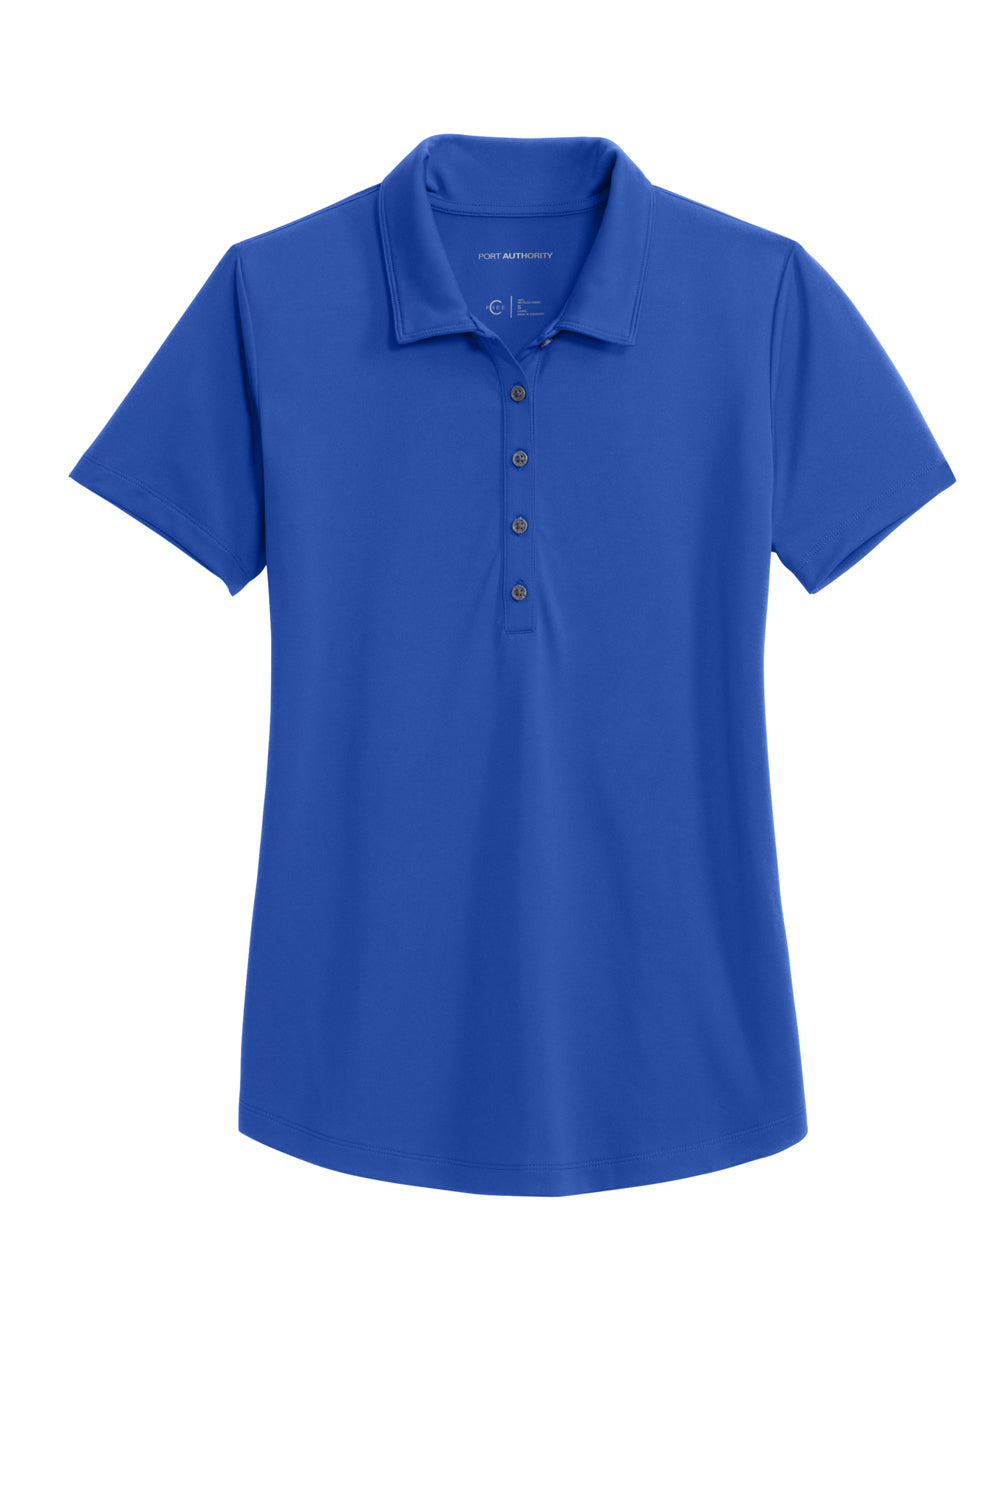 Port Authority LK864 C-Free Performance Short Sleeve Polo Shirt True Royal Blue Flat Front